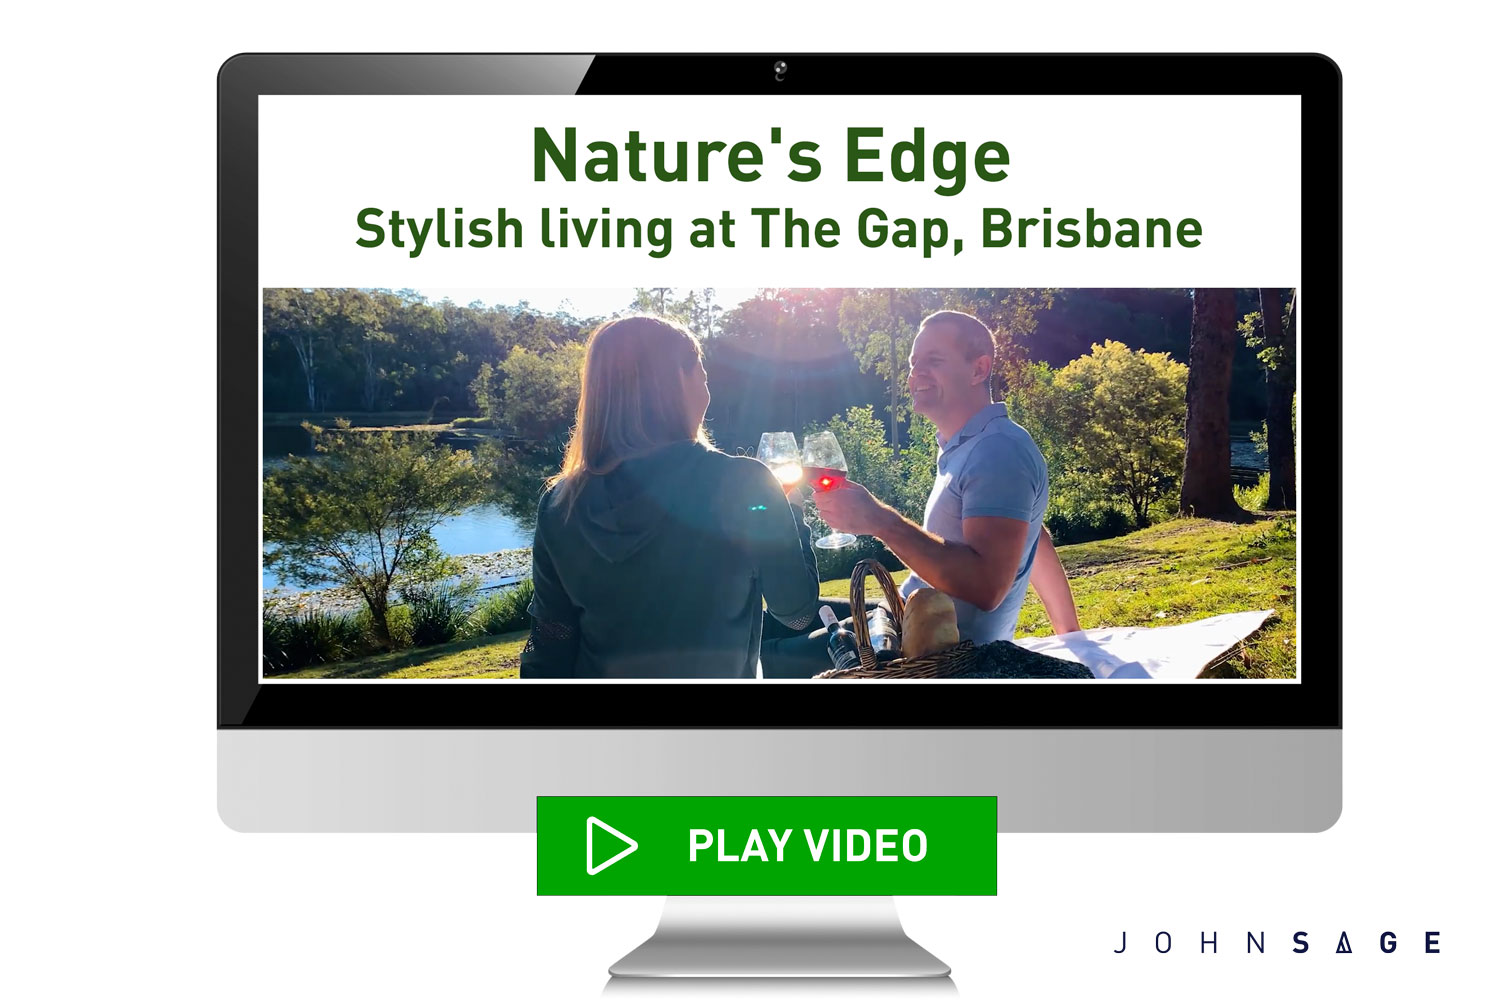 Play Video. Nature's Edge stylish living at The Gap, Brisbane